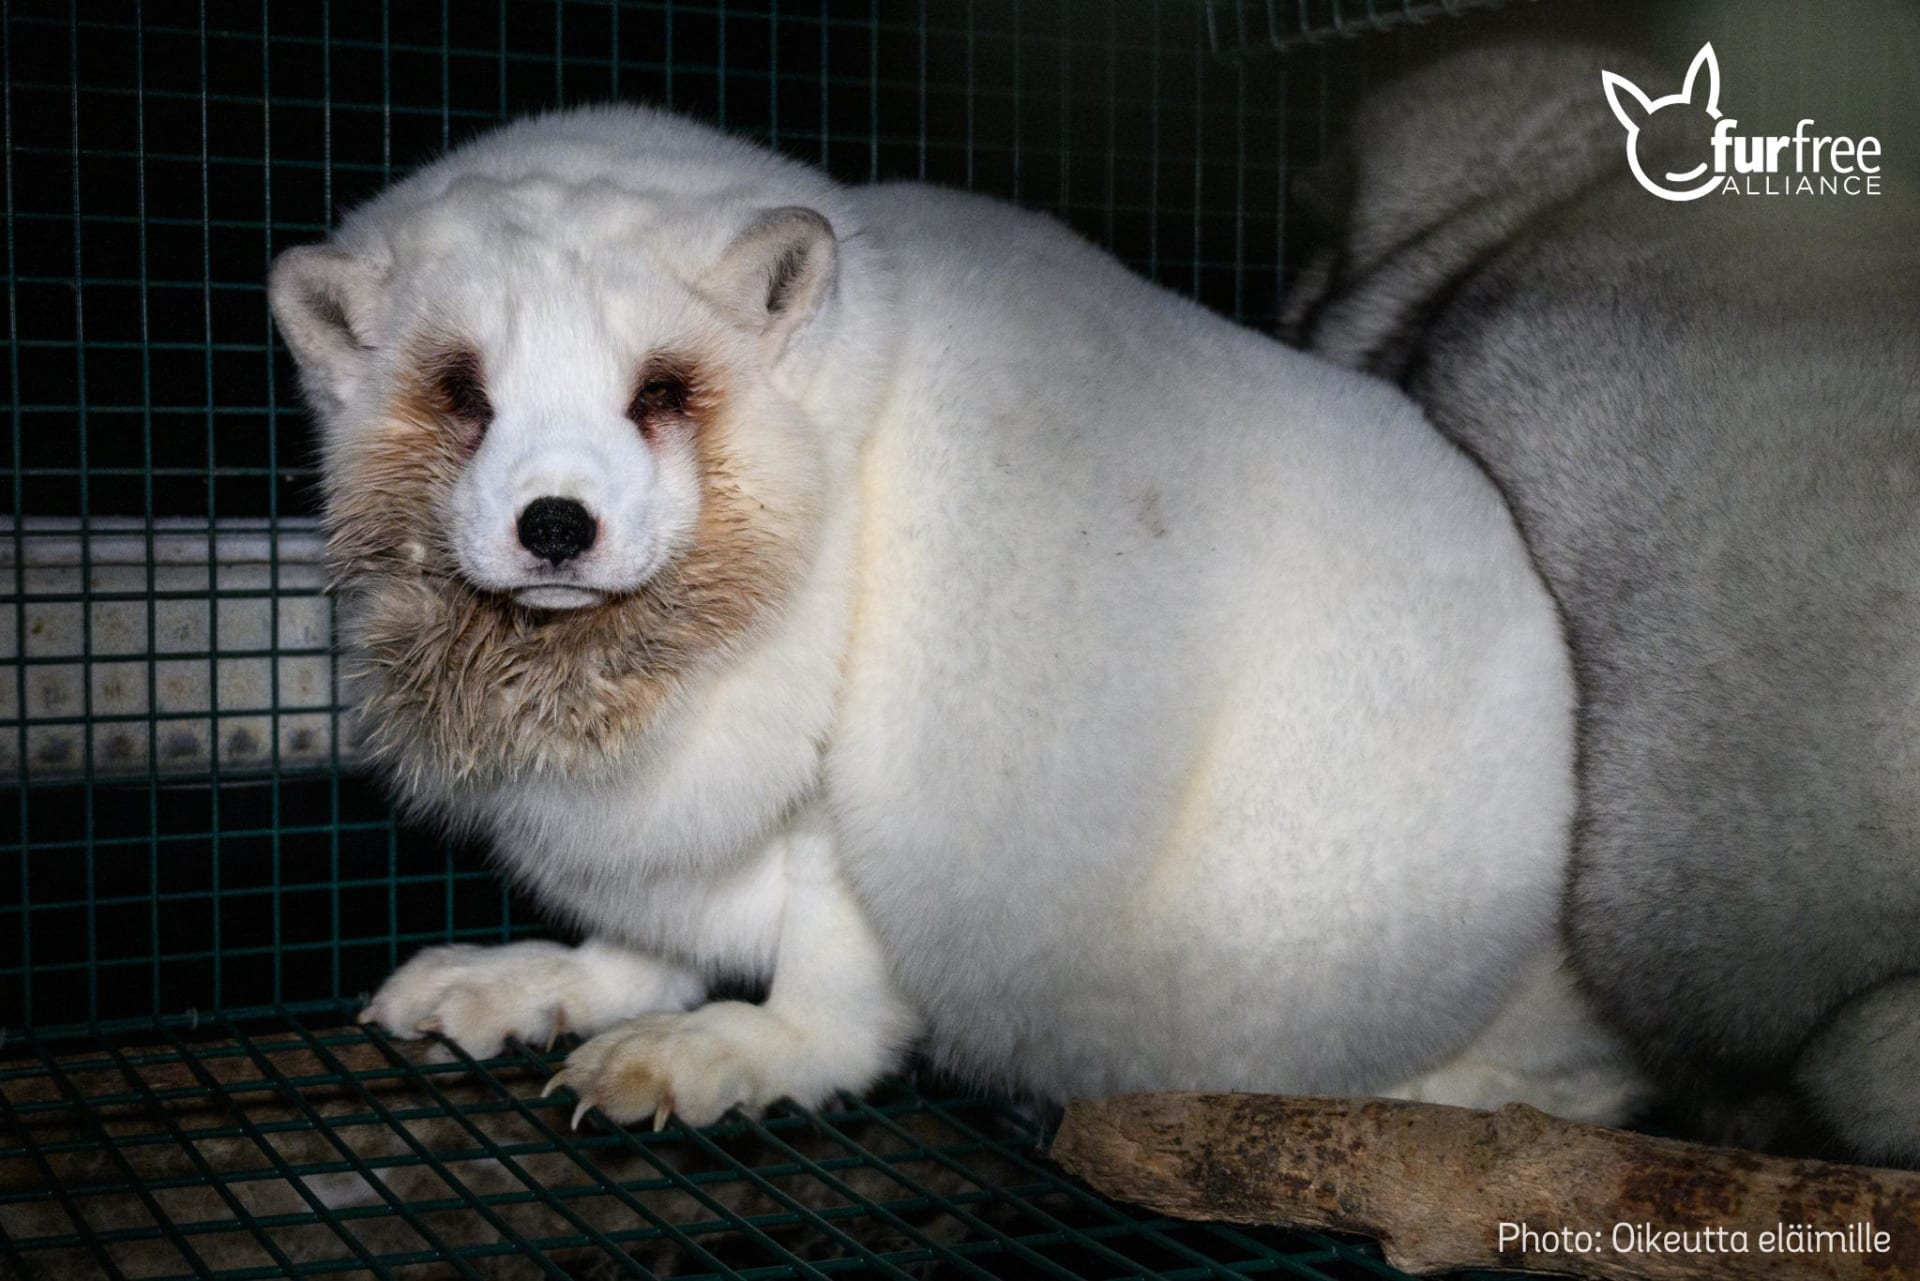 Kožešinová farma ve Finsku  obézní liška